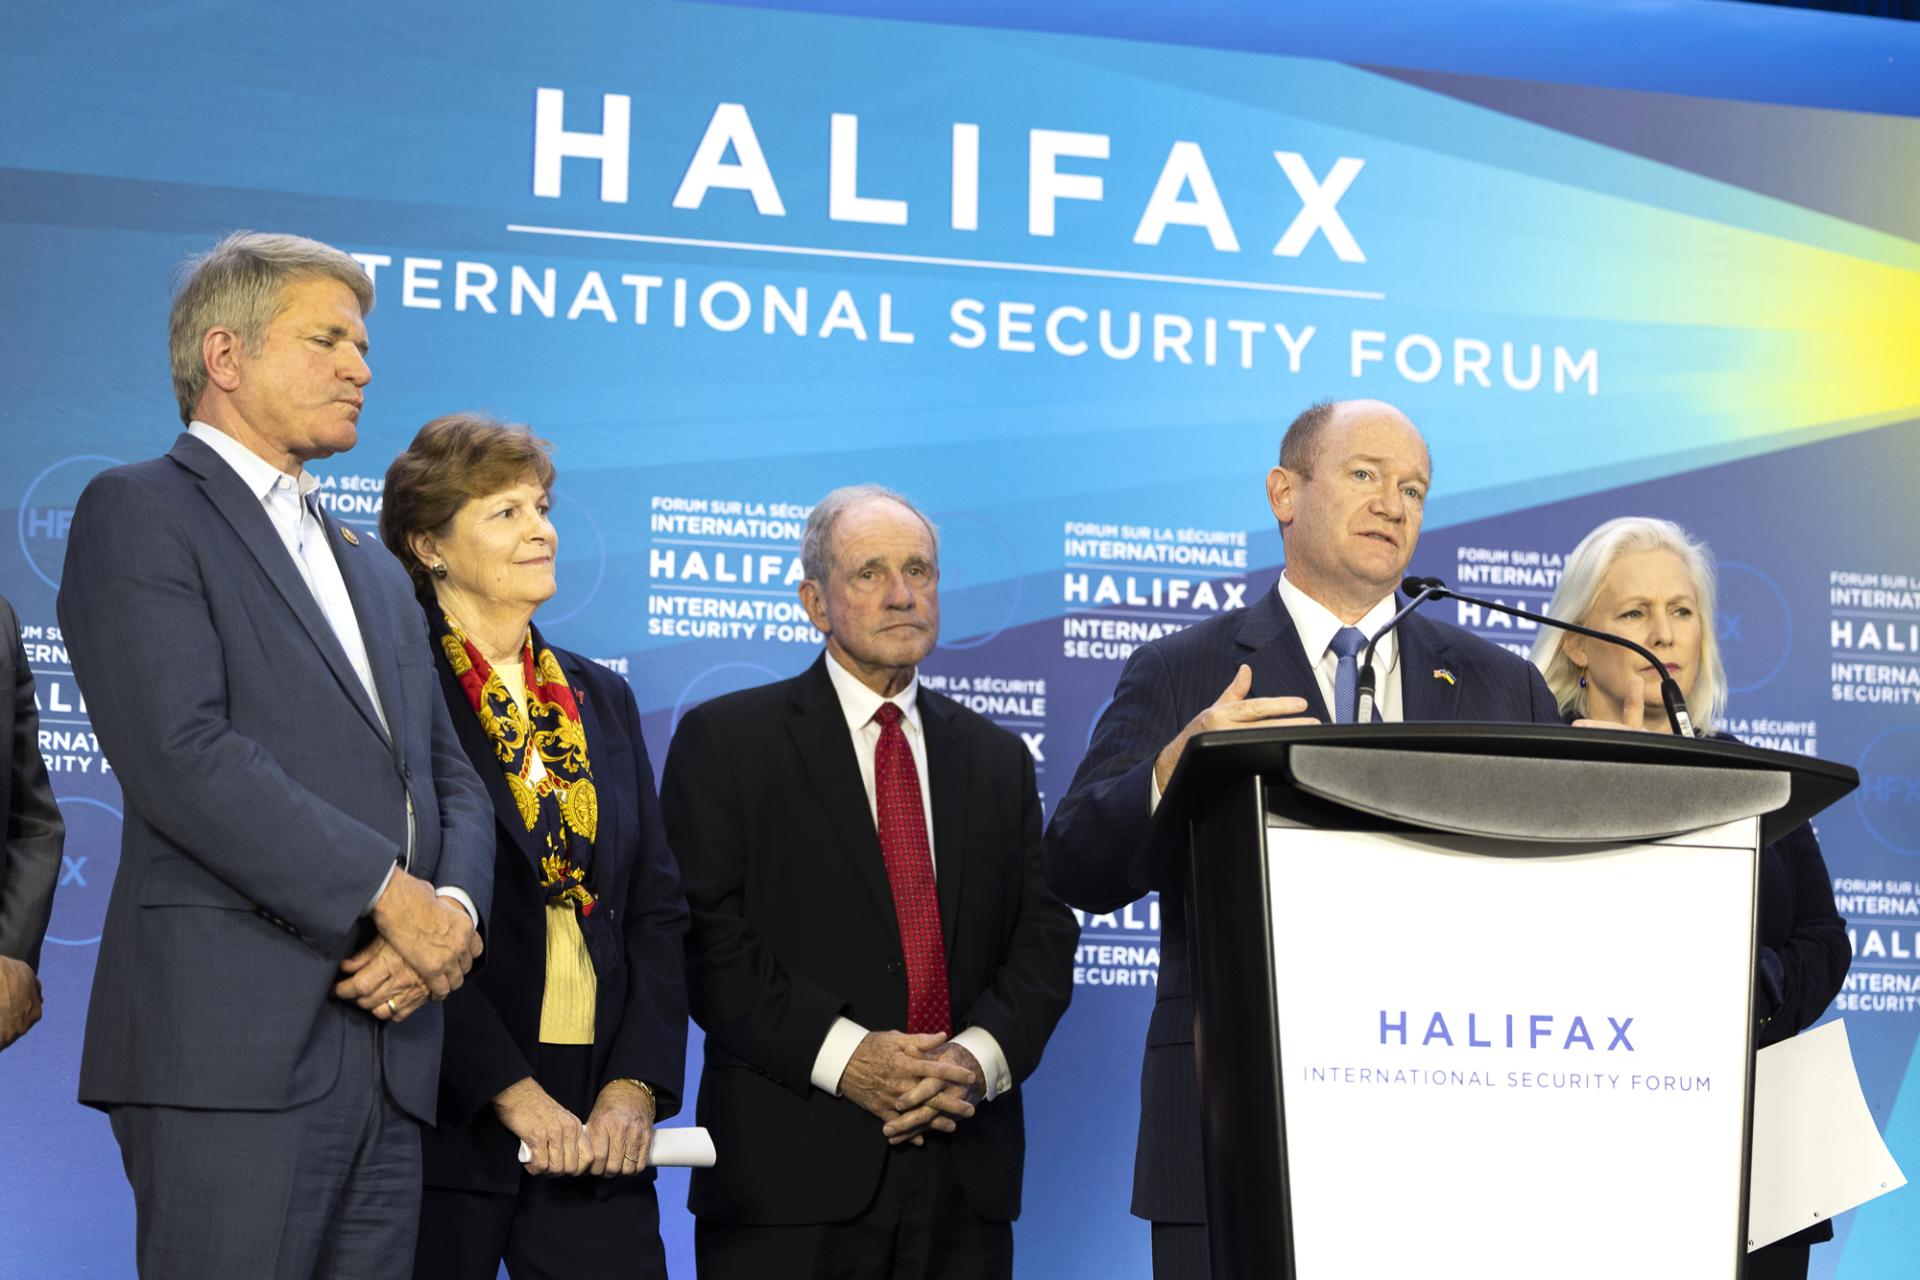 HLS.Today - Halifax International Security Forum in Nova Scotia twitt